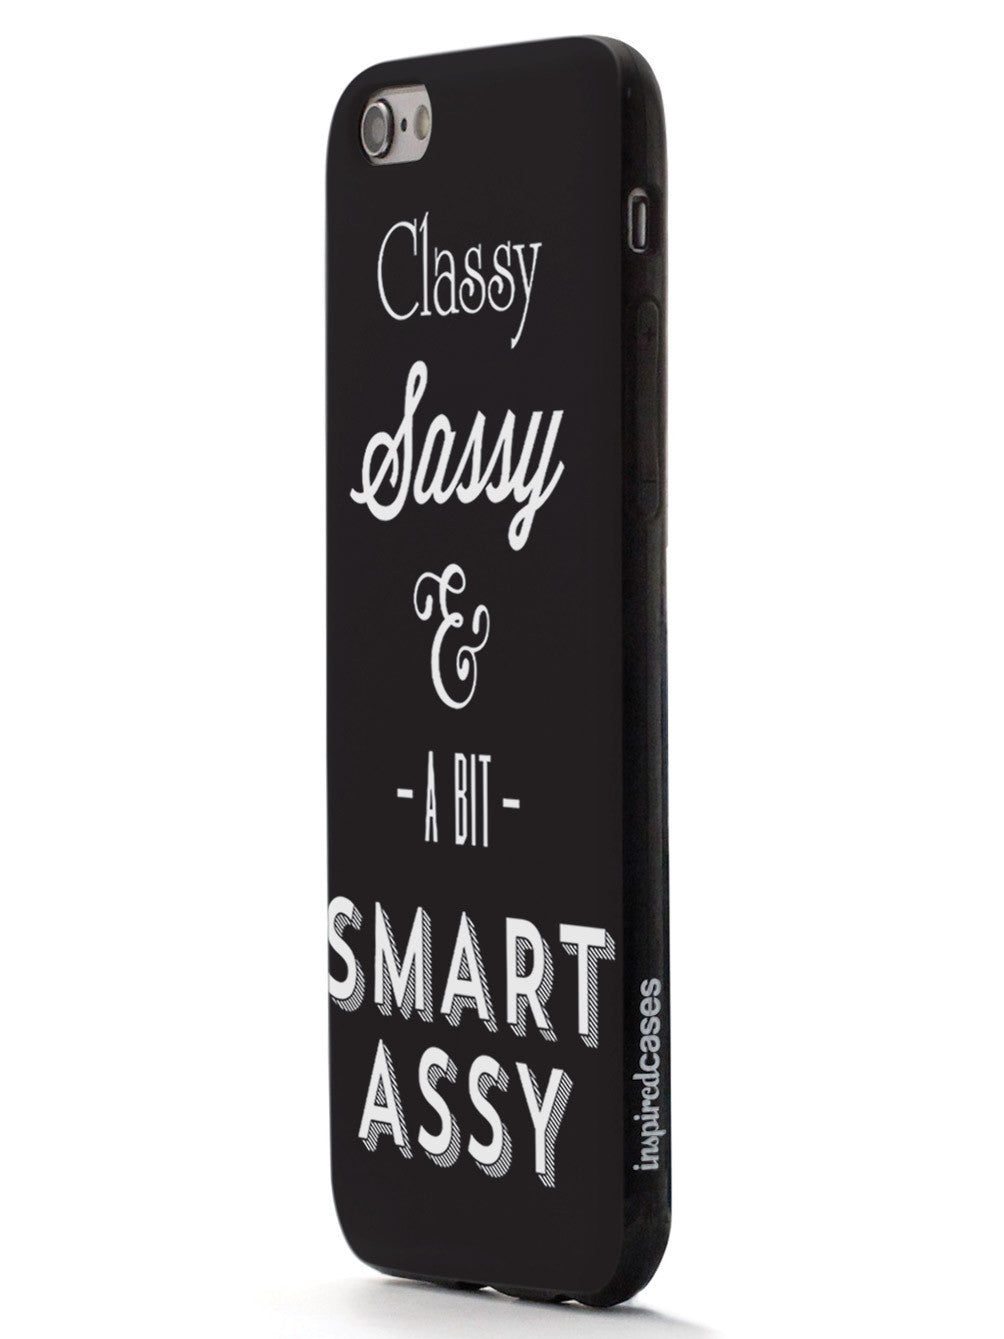 Classy, Sassy, Smart Assy Case